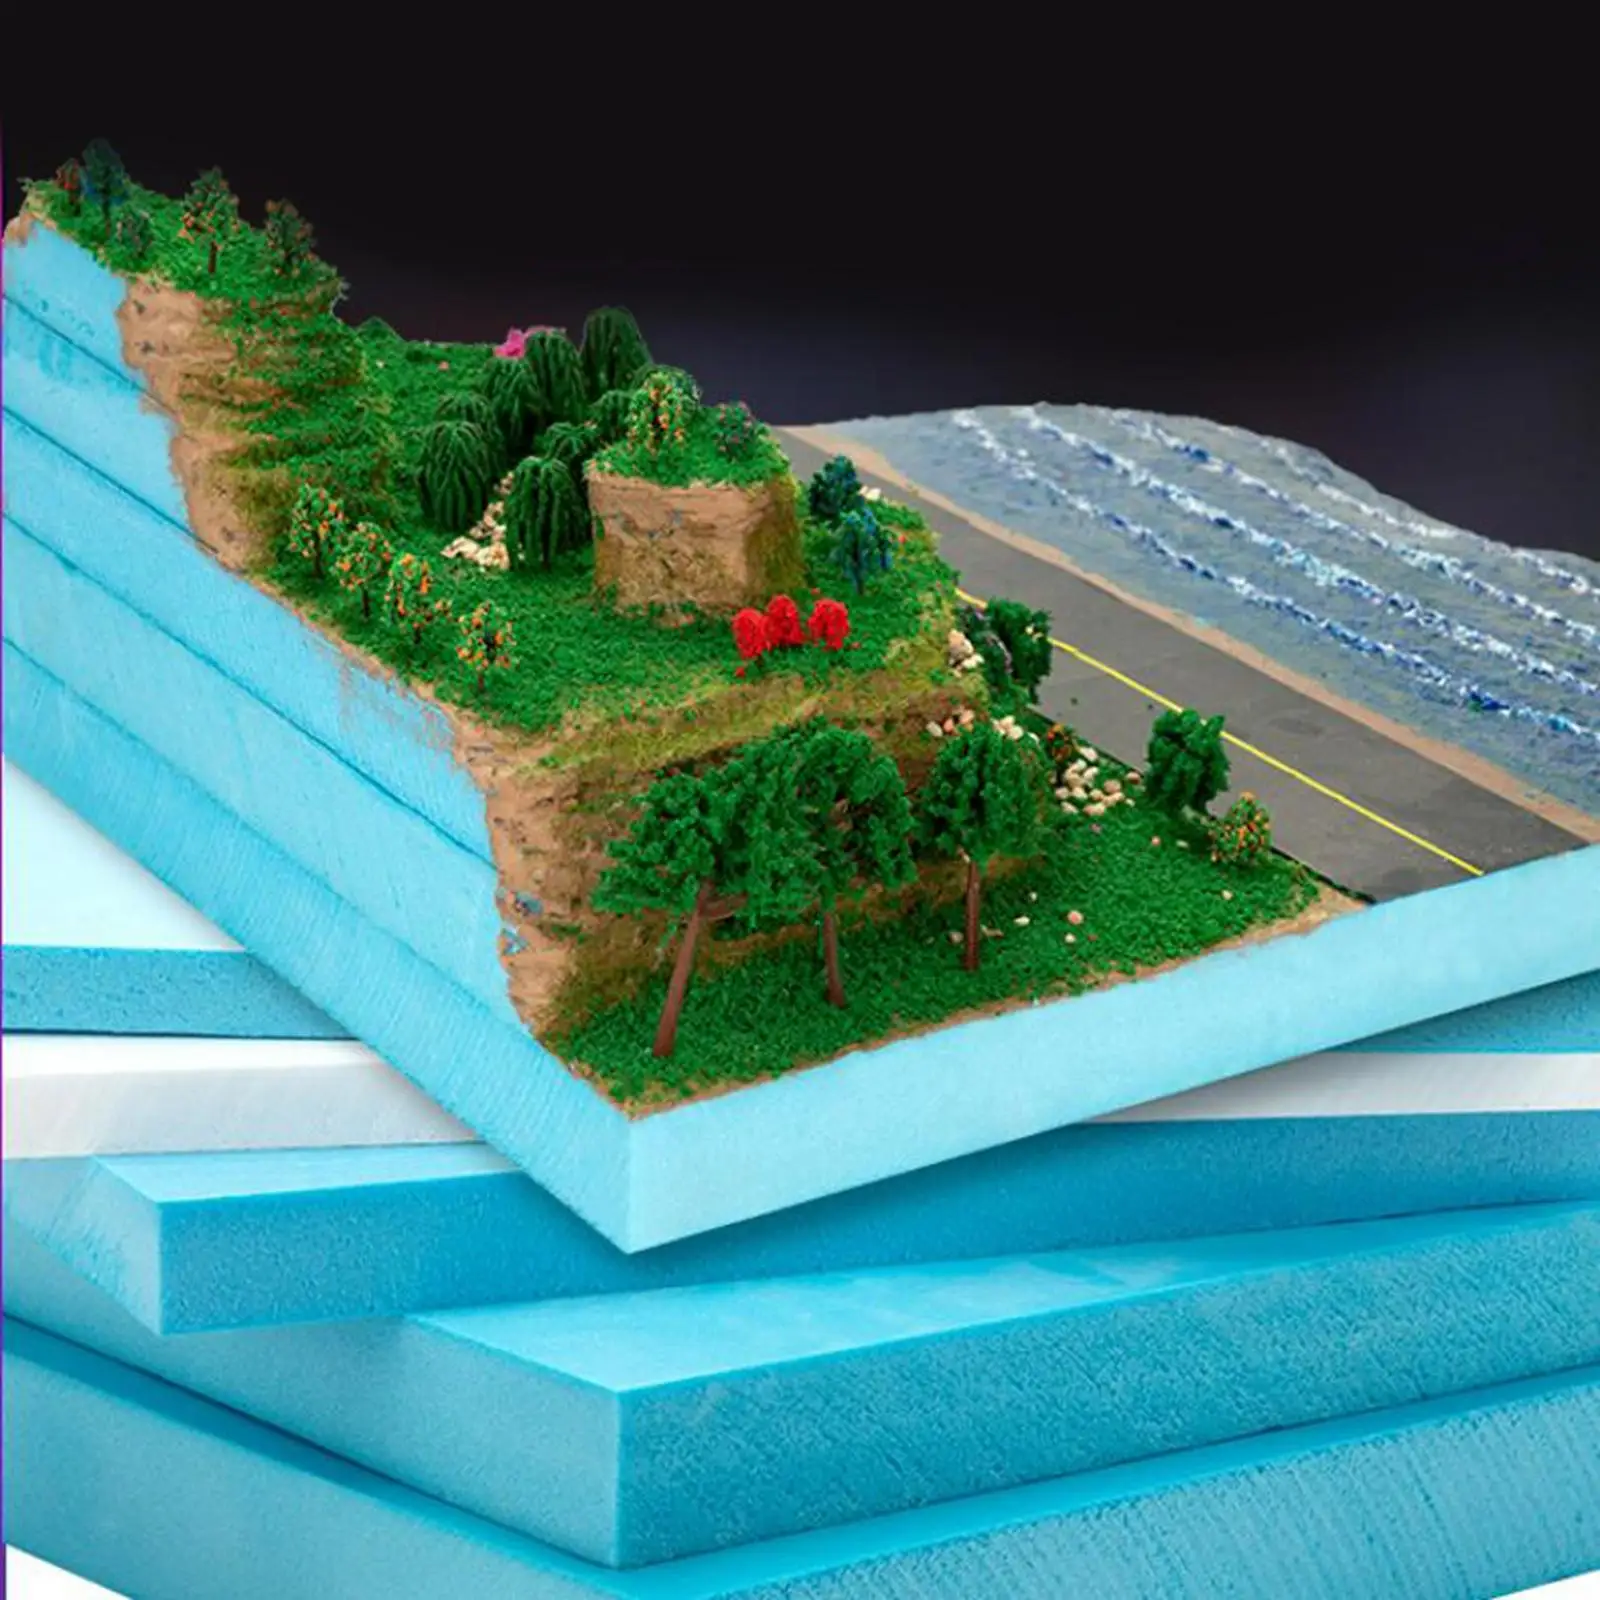 2 Pieces Foam Board Diorama Base for Building Mountains Miniature Garden